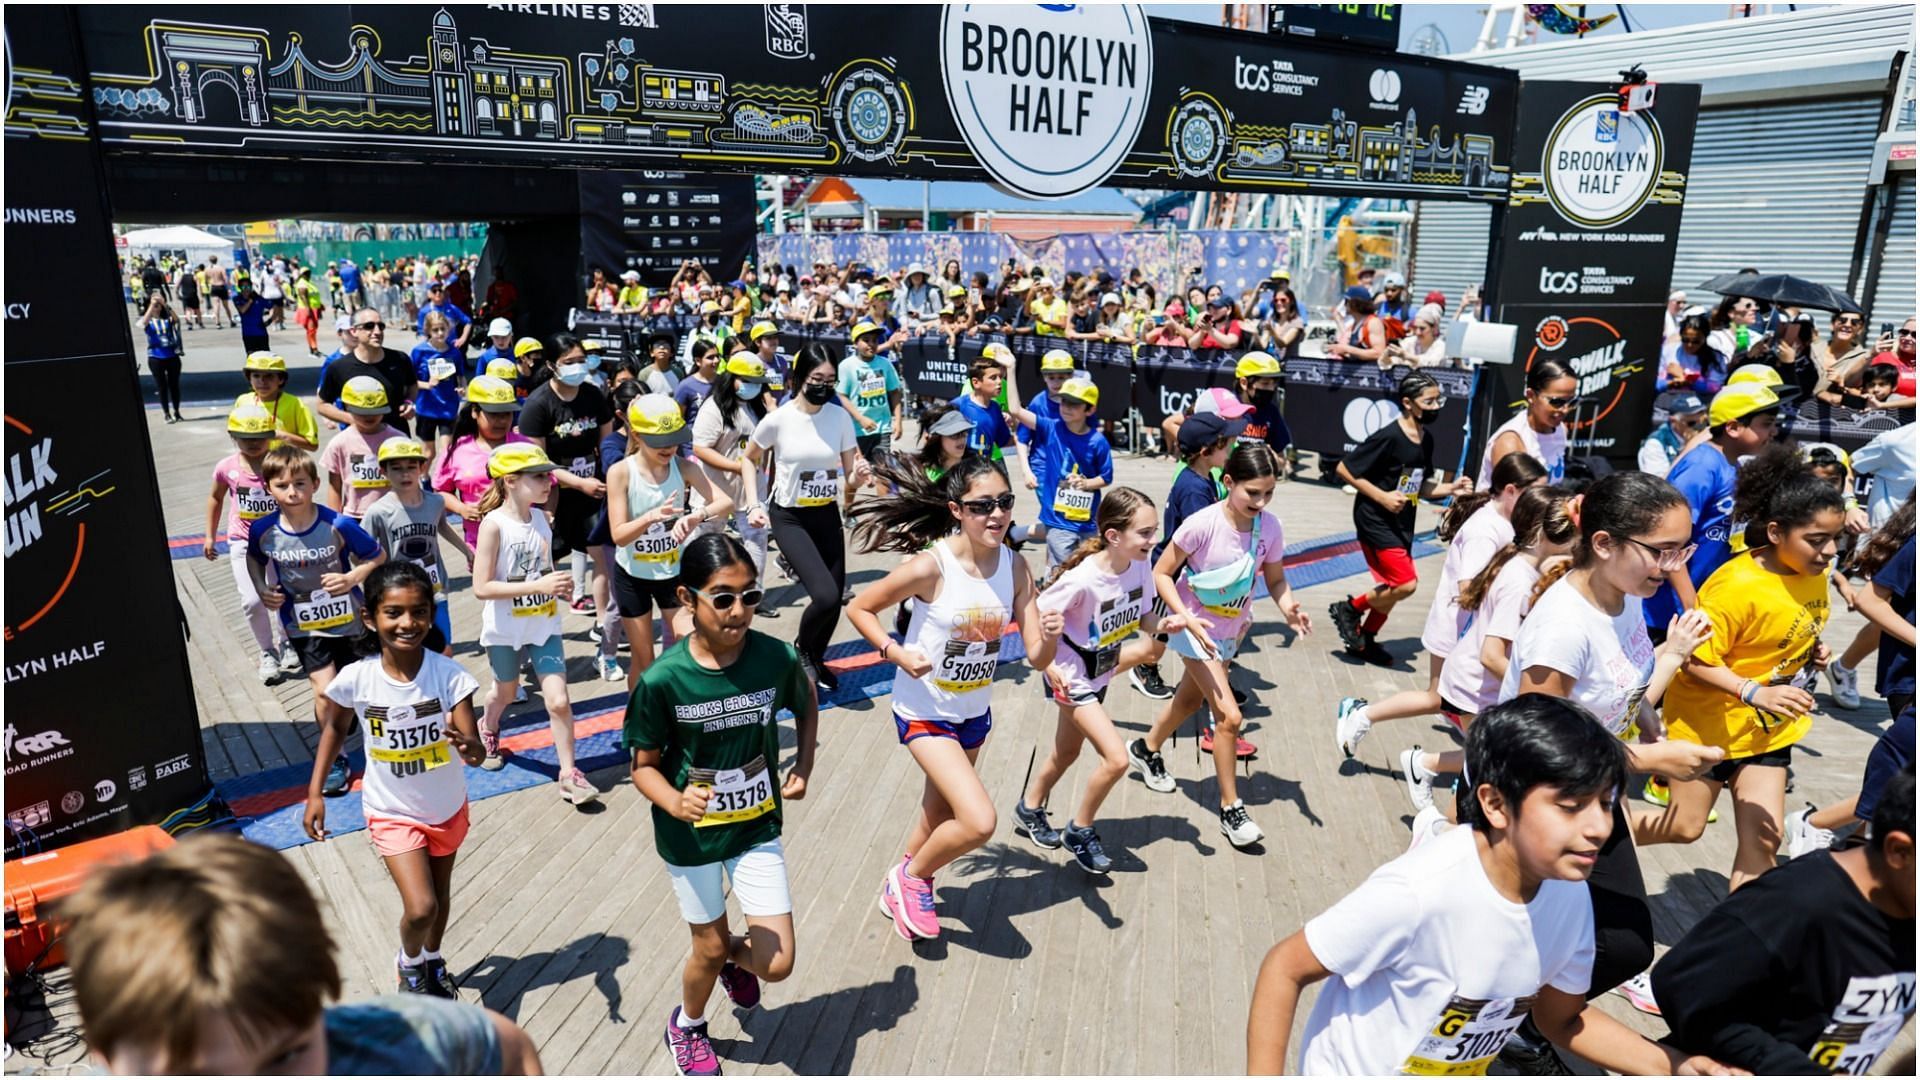 Brooklyn Half Marathon Runner dies at finish line, 17 others